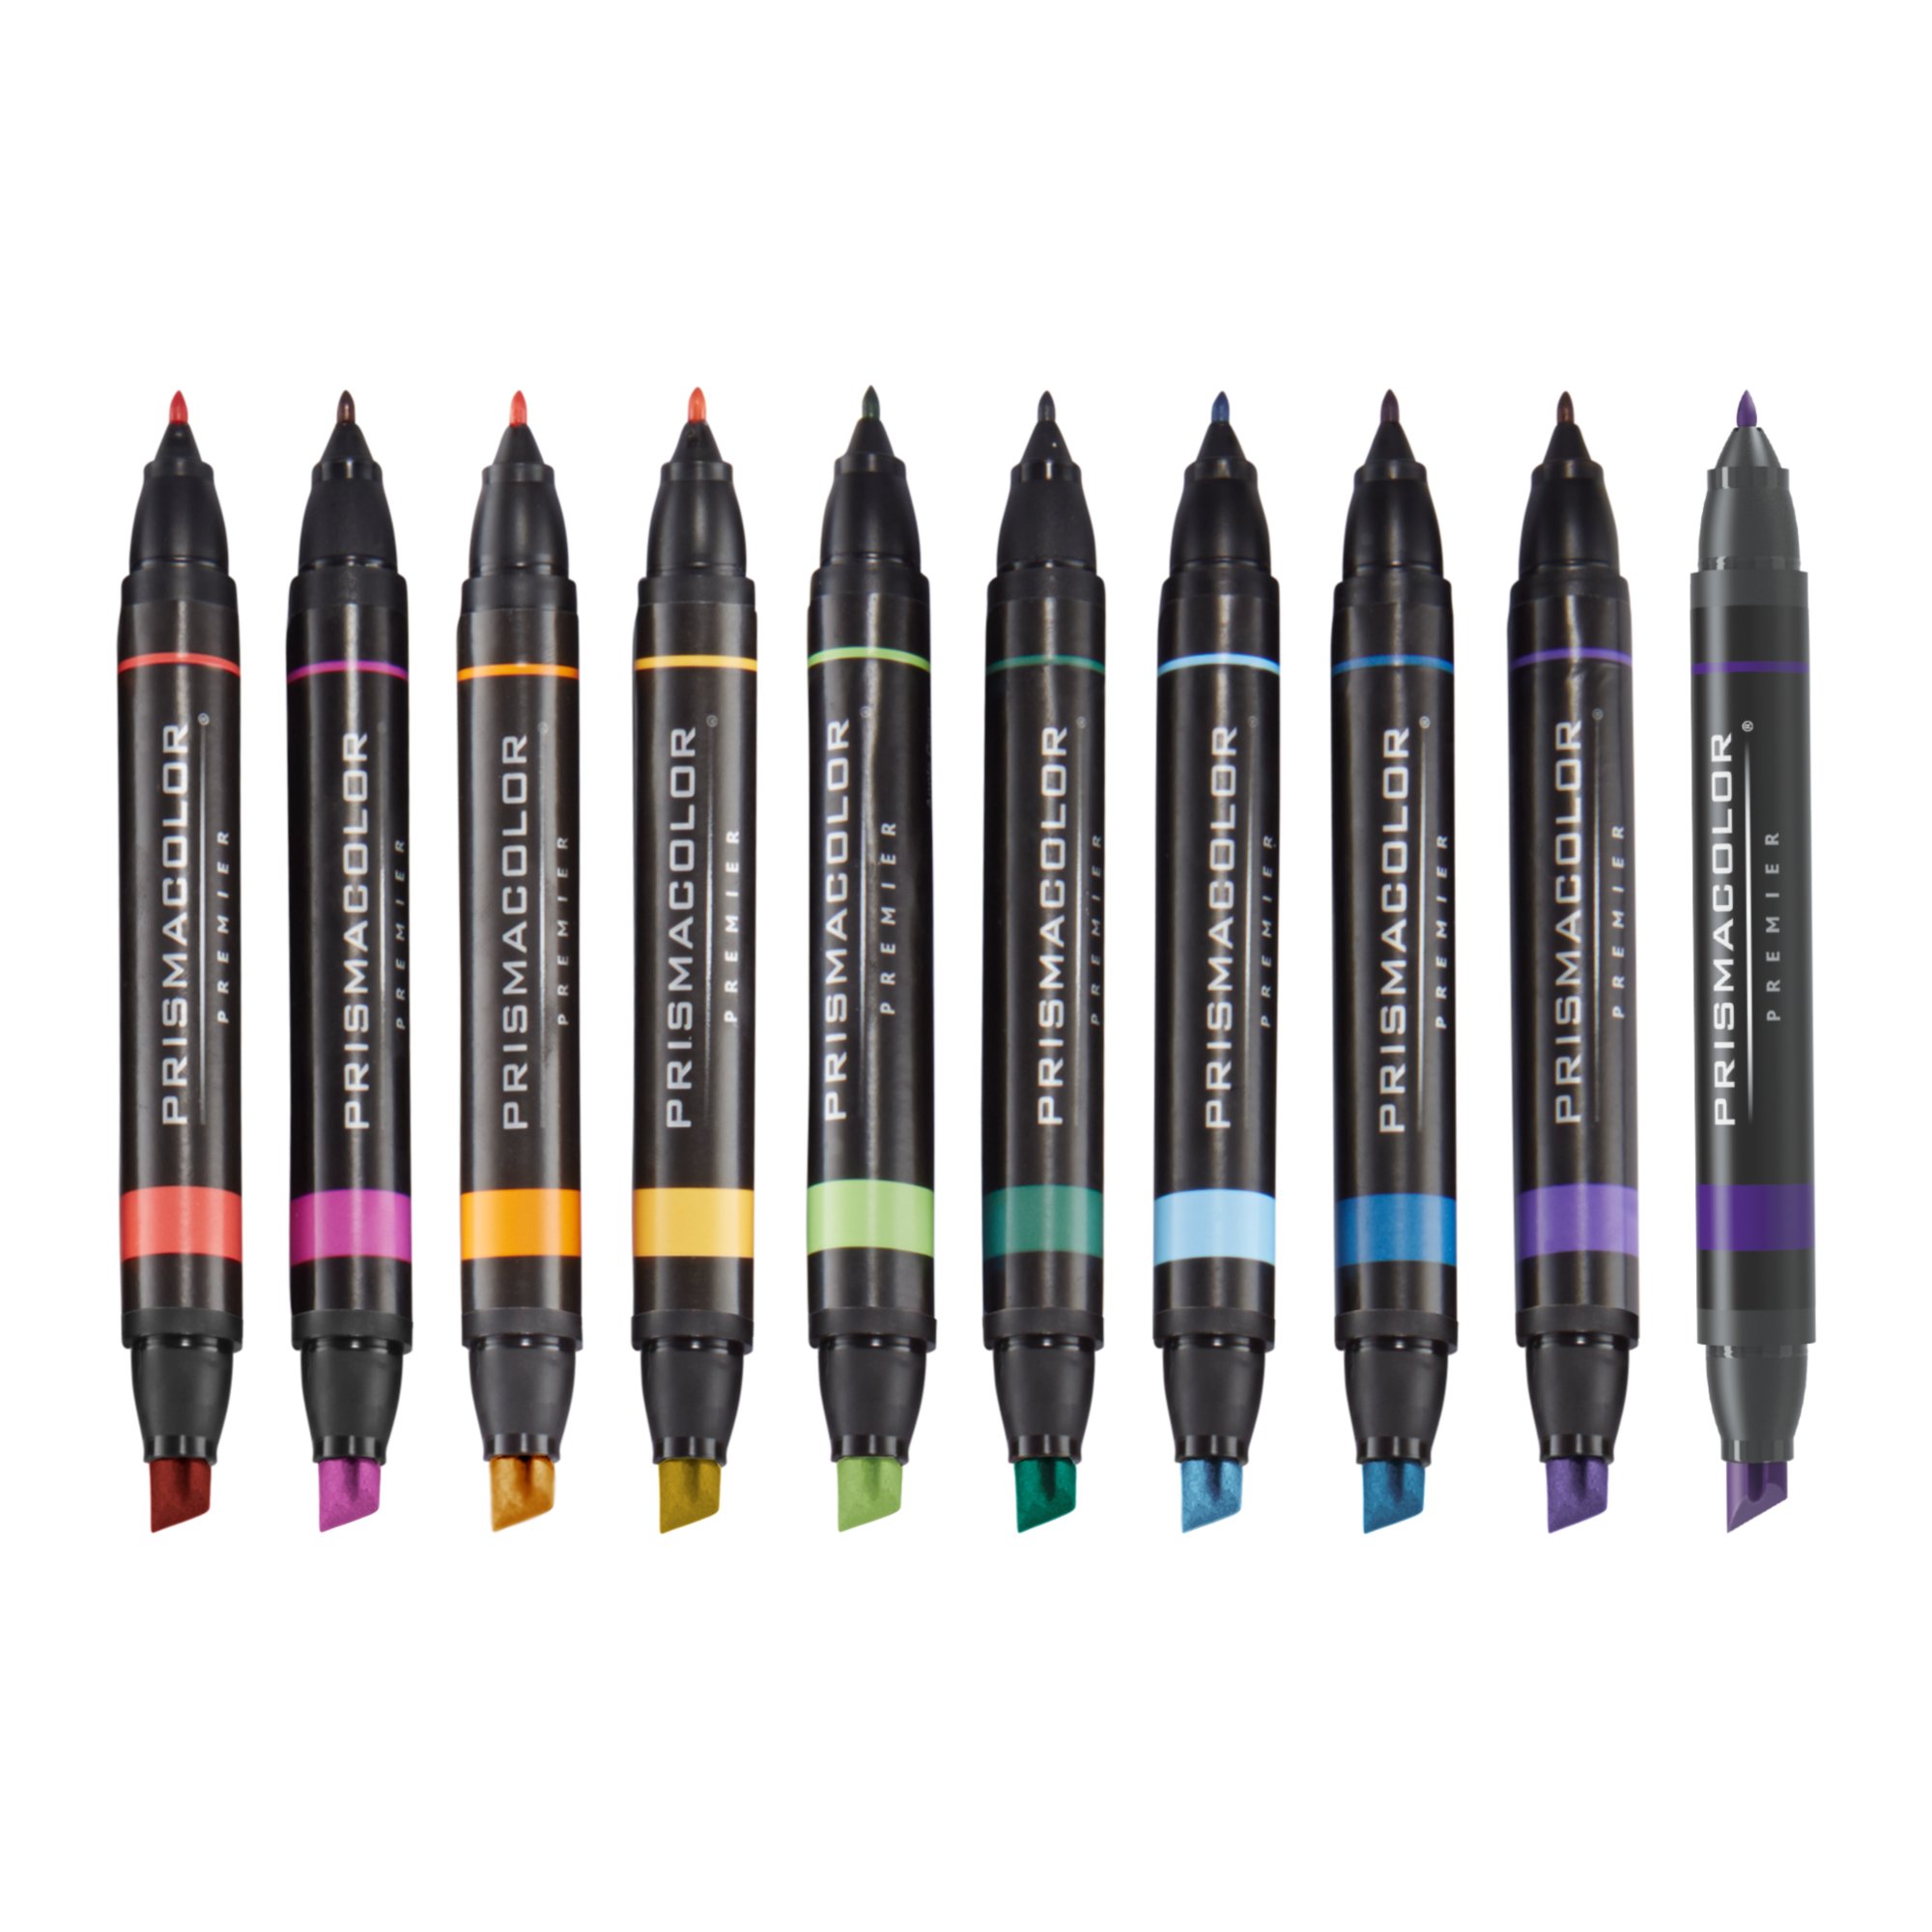 Crayola Blending Markers (Copic Alternative?!) 